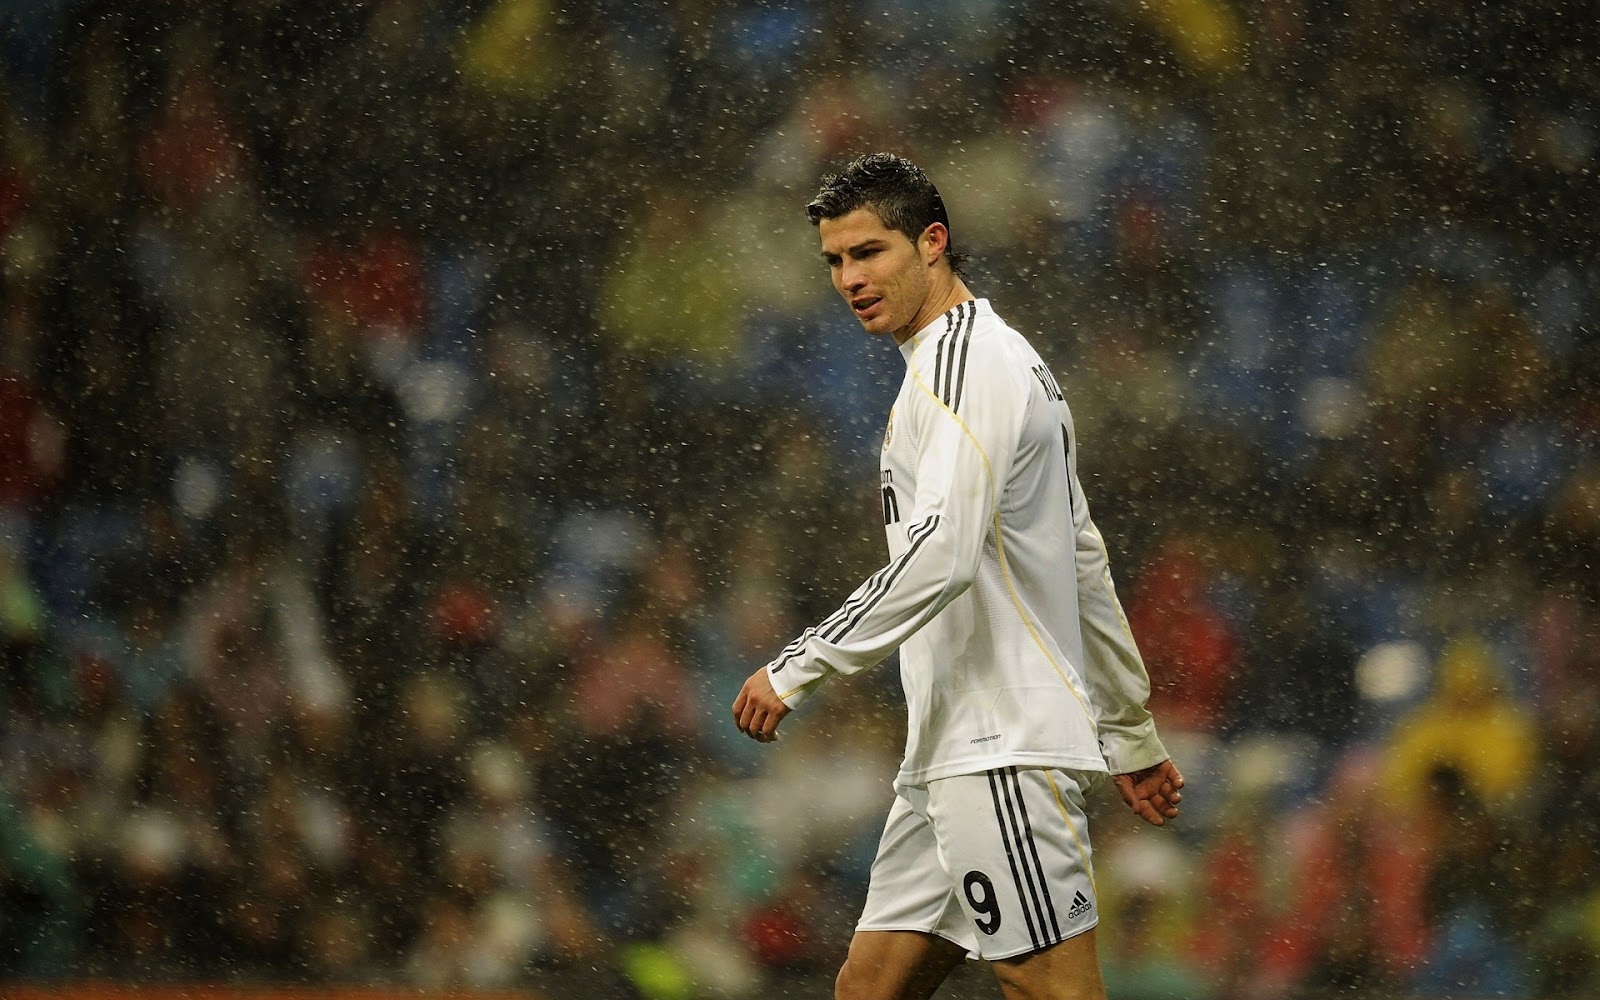 https://blogger.googleusercontent.com/img/b/R29vZ2xl/AVvXsEhNnJtqe45A3XUziM3swHFR57vLaXYXRnzt9dagj5wY7ltM4UtdOrGM1ULueTtMNpvDG3BR8yGXGLmALKeVOMM9z6v50mYdPTNp4c8OIacO9KOwPGlUvM9DWCgWGZUo4PDKSTRIQAHmMKbX/s1600/cristiano+Ronaldo+in+rain.jpg